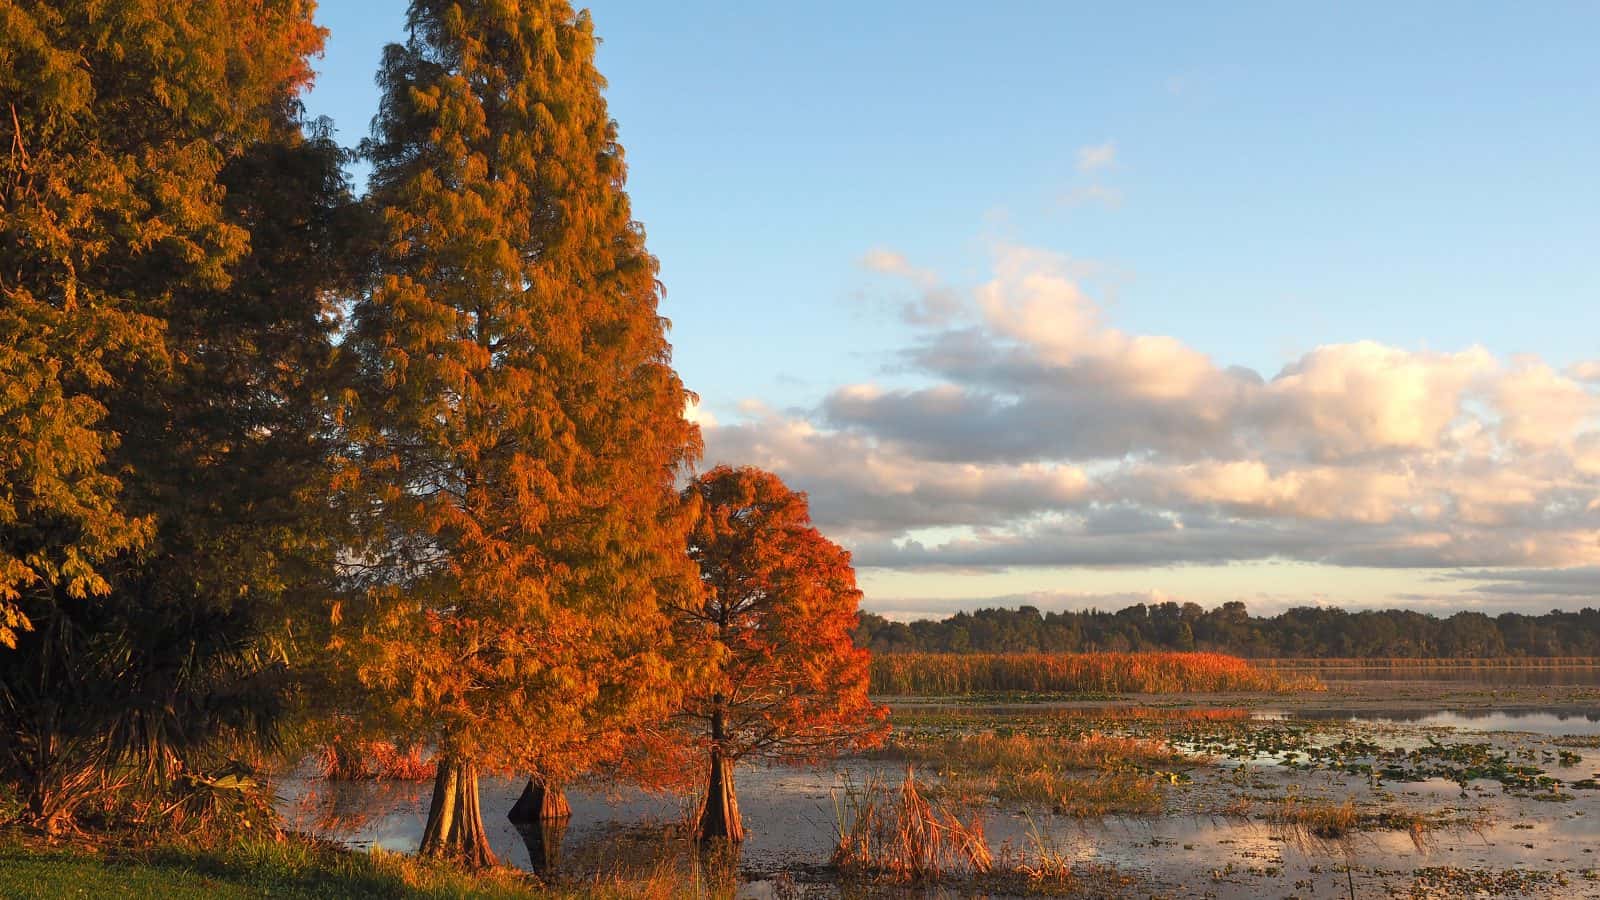 Cypress tress turn from green to orange in fall in Florida.